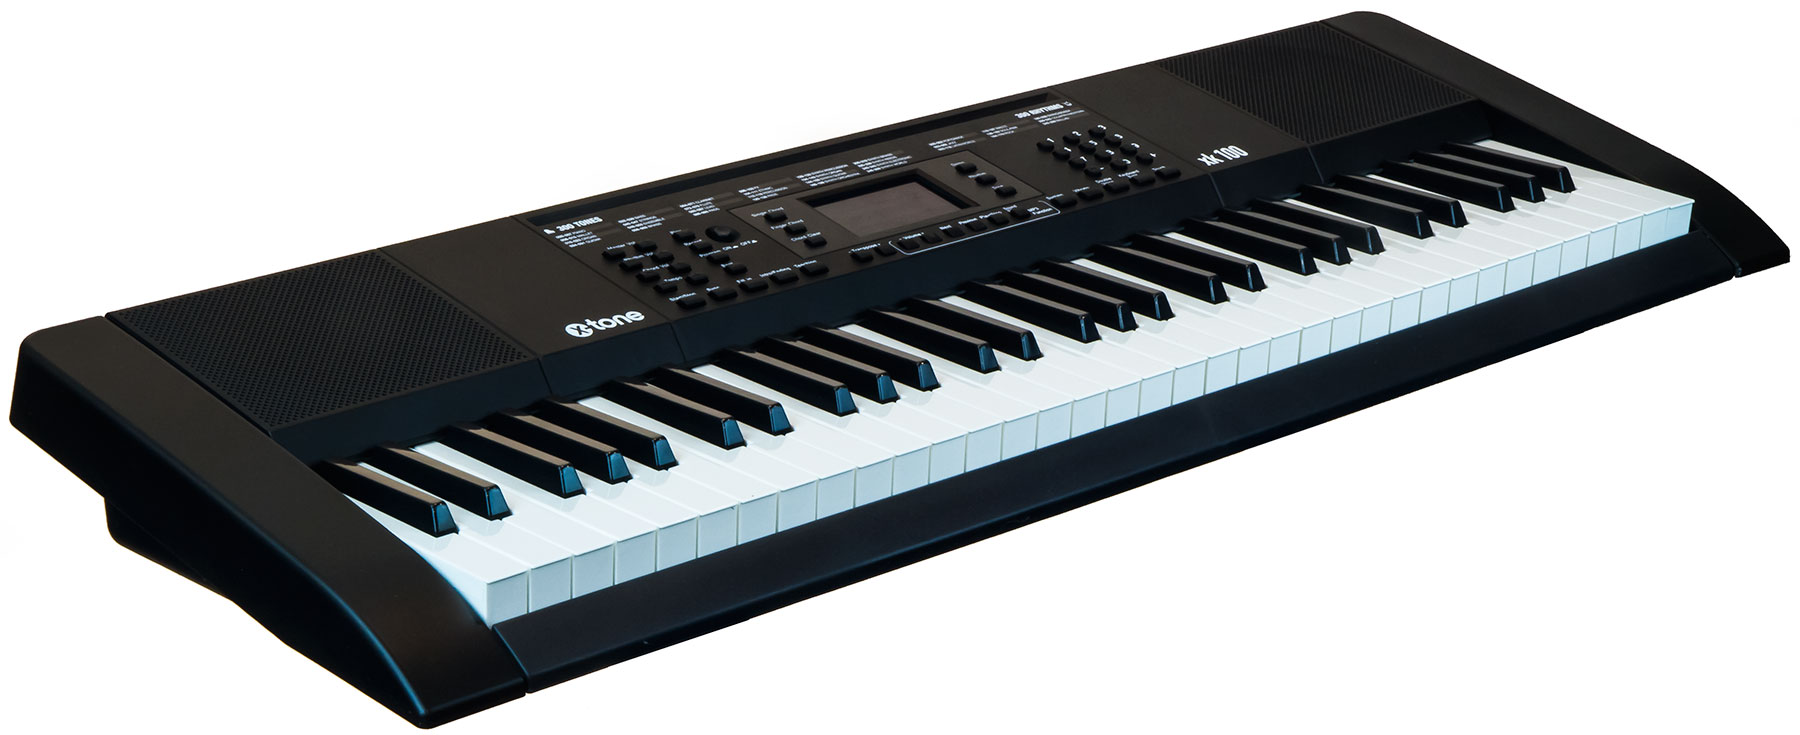 X-tone Xk100 Clavier Arrangeur - Entertainer Keyboard - Variation 1